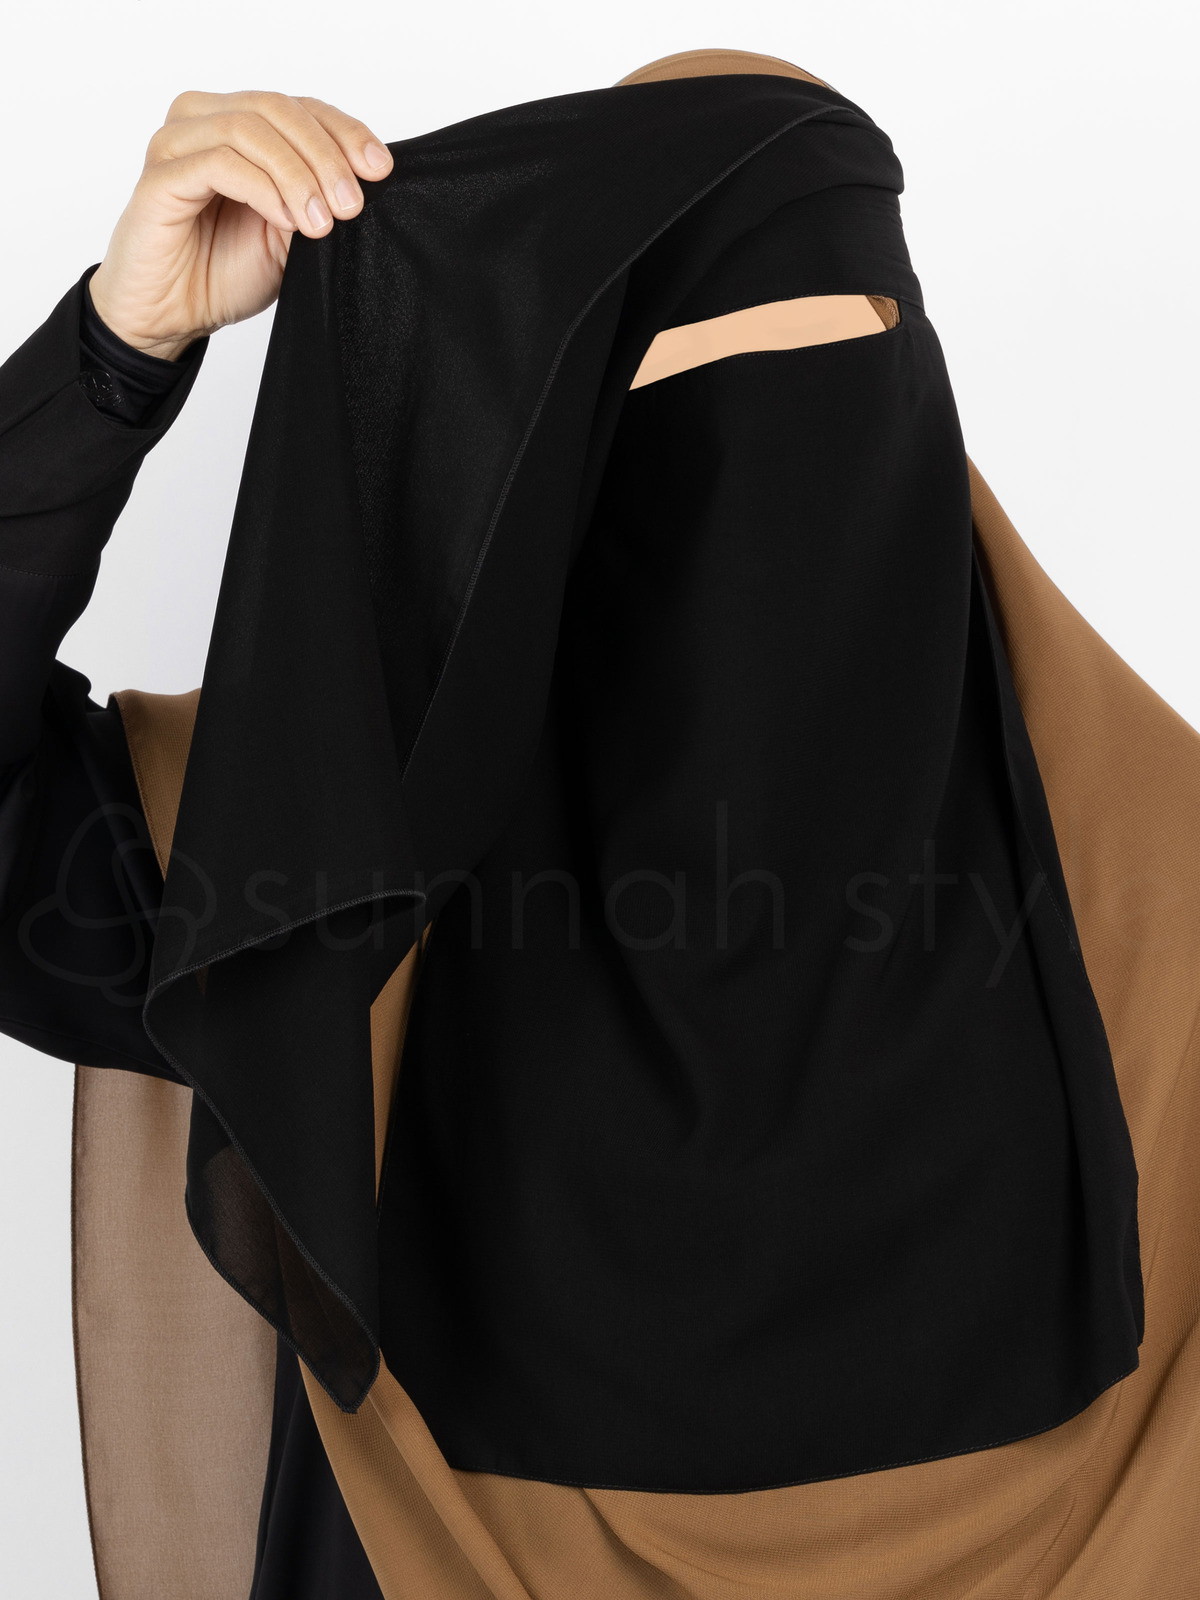 Narrow No-Pinch One Layer Niqab (Premium Chiffon)